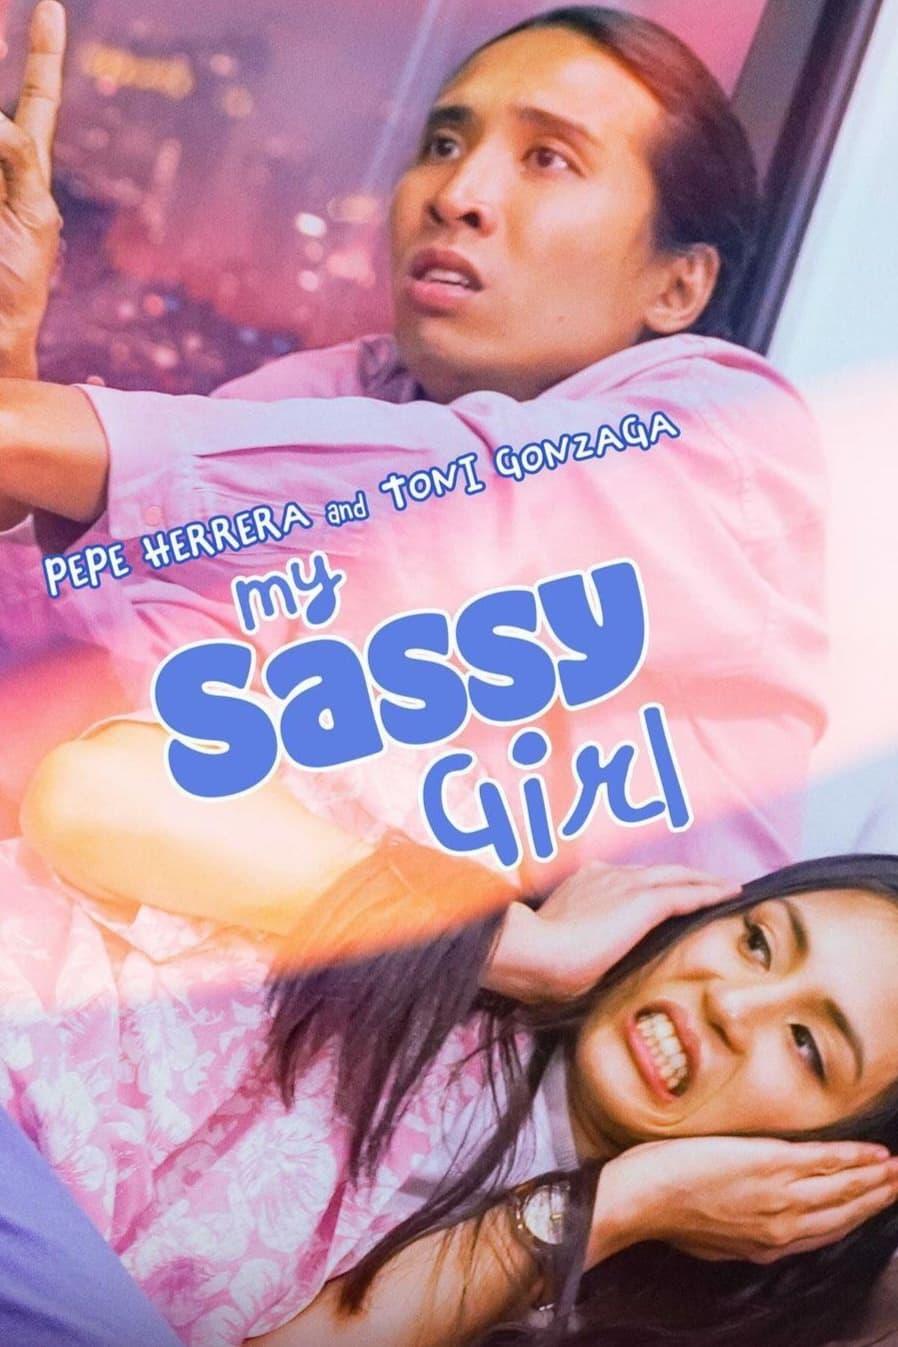 My Sassy Girl poster